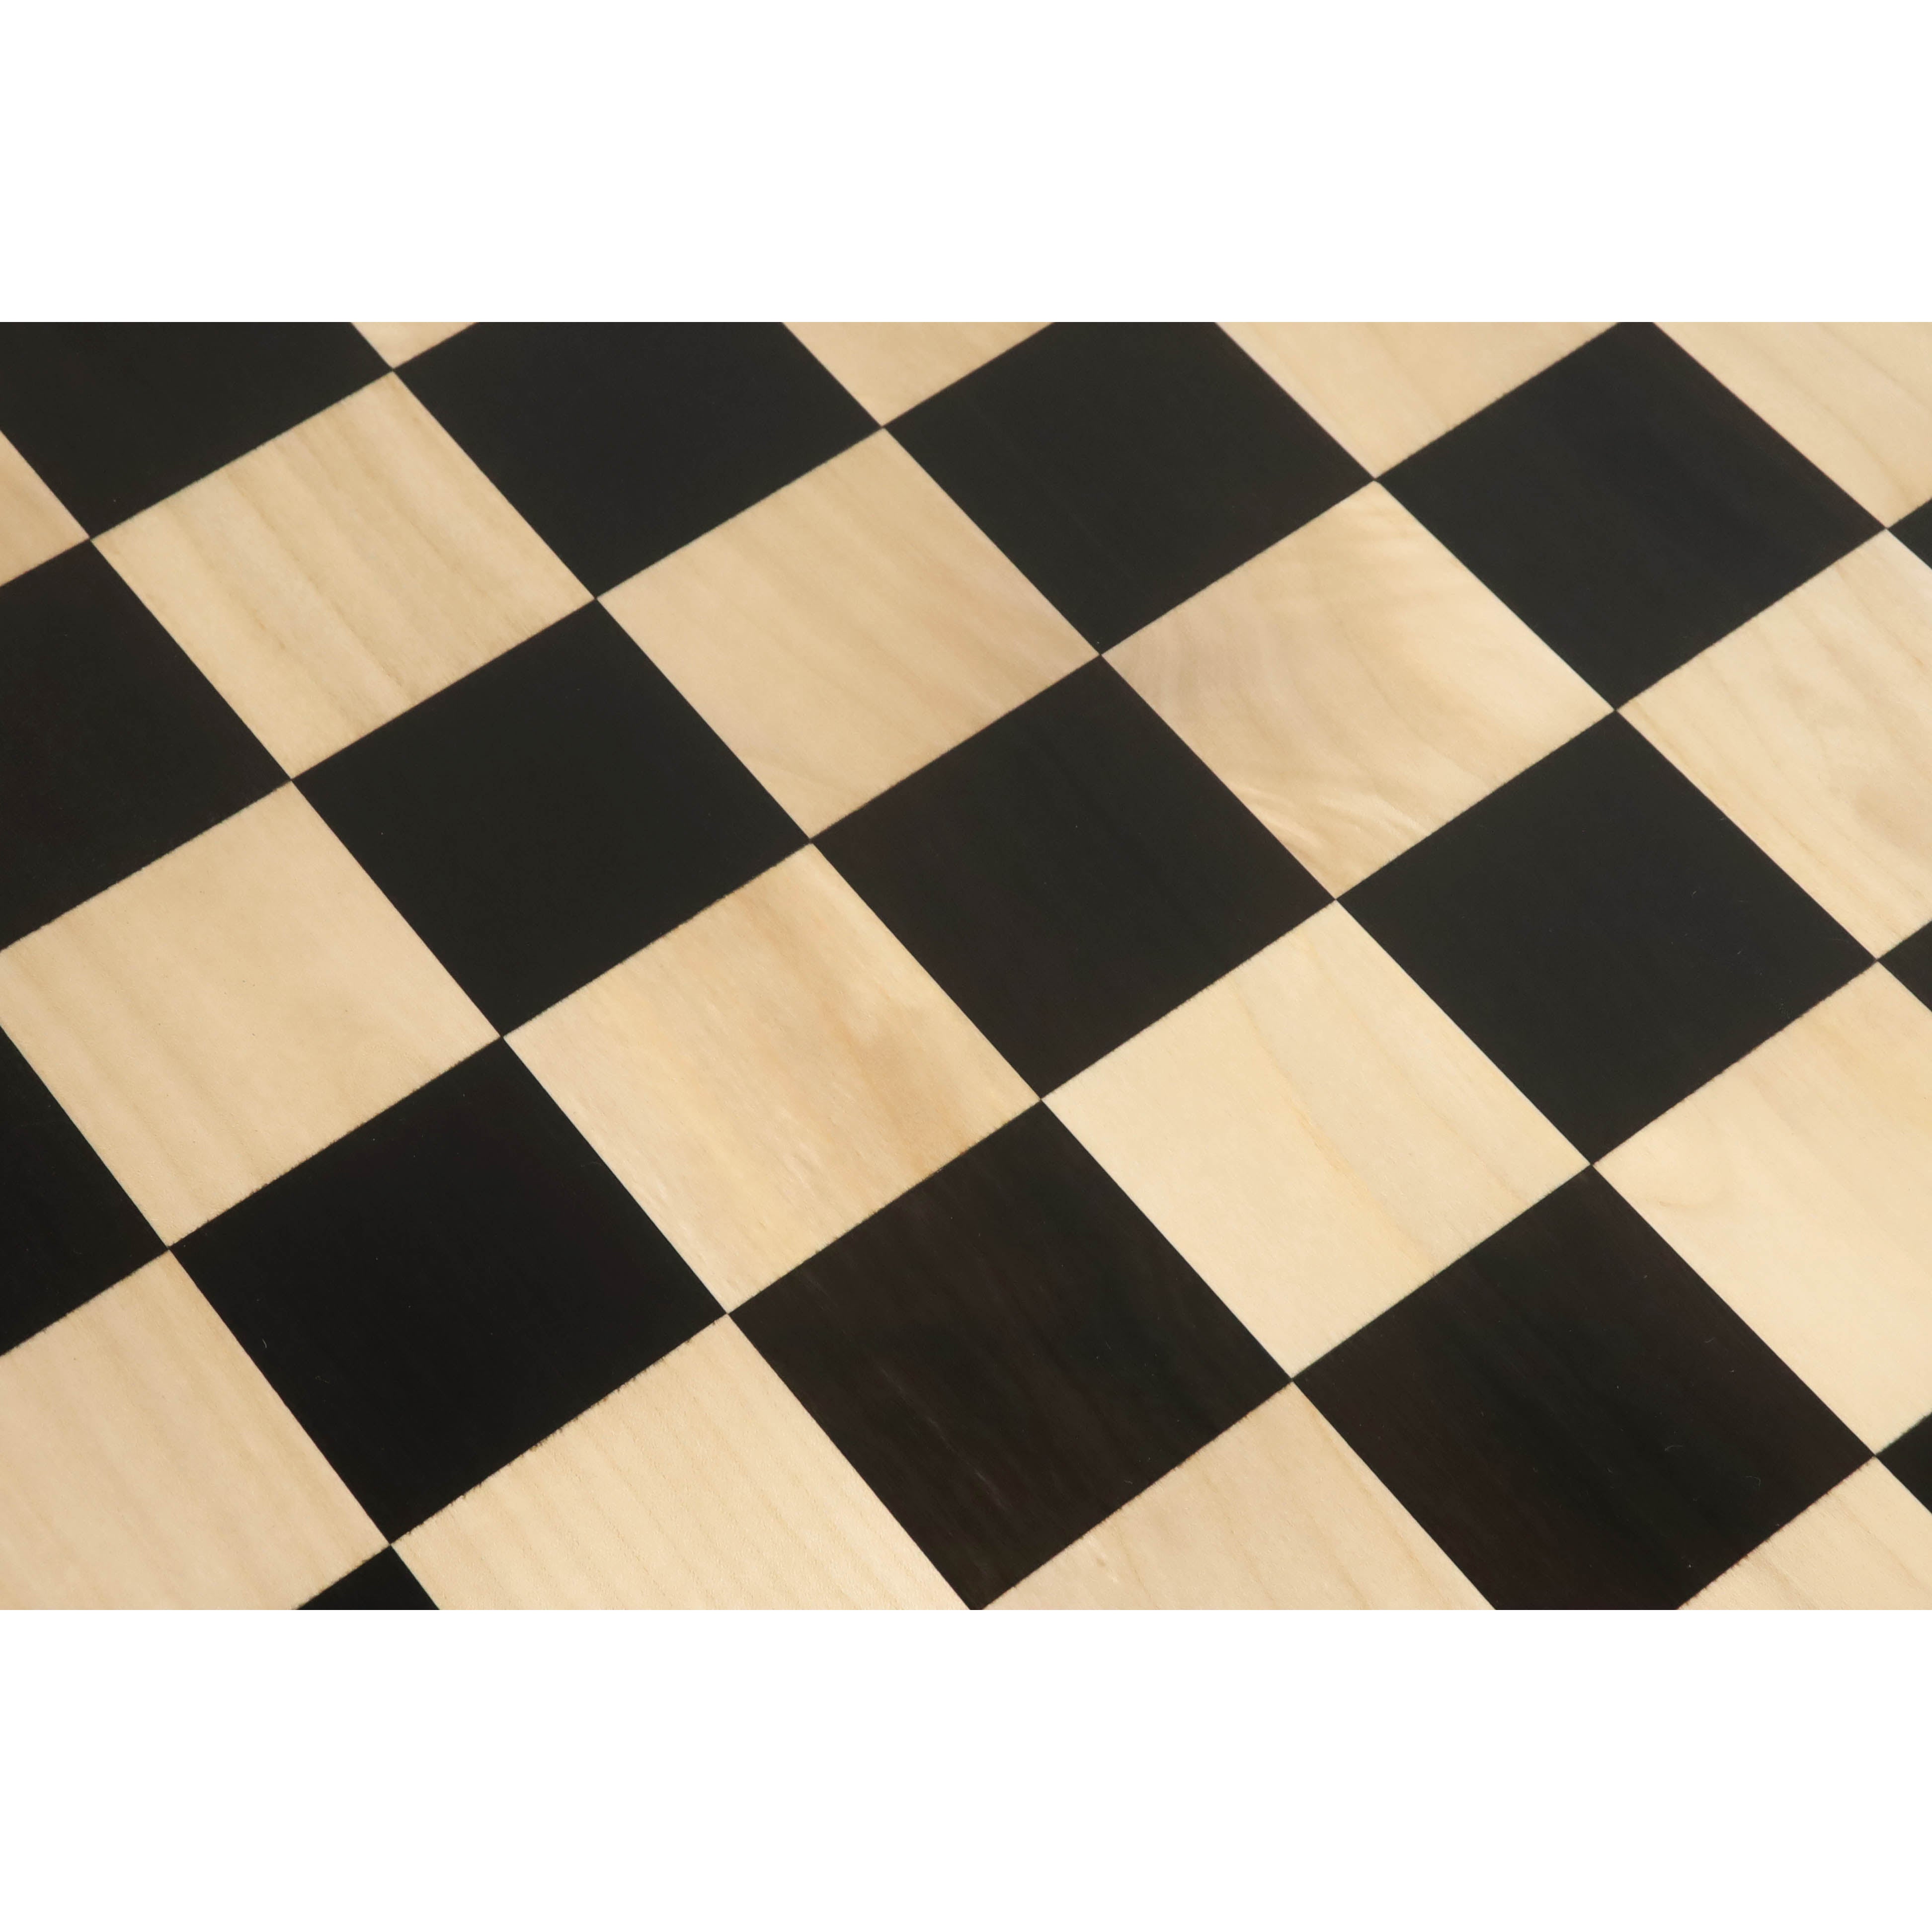 Combo of 4.2" Luxury Augustus Staunton Chess Set with 23" Large Ebony & Maple Wood Chessboard  and Storage Box